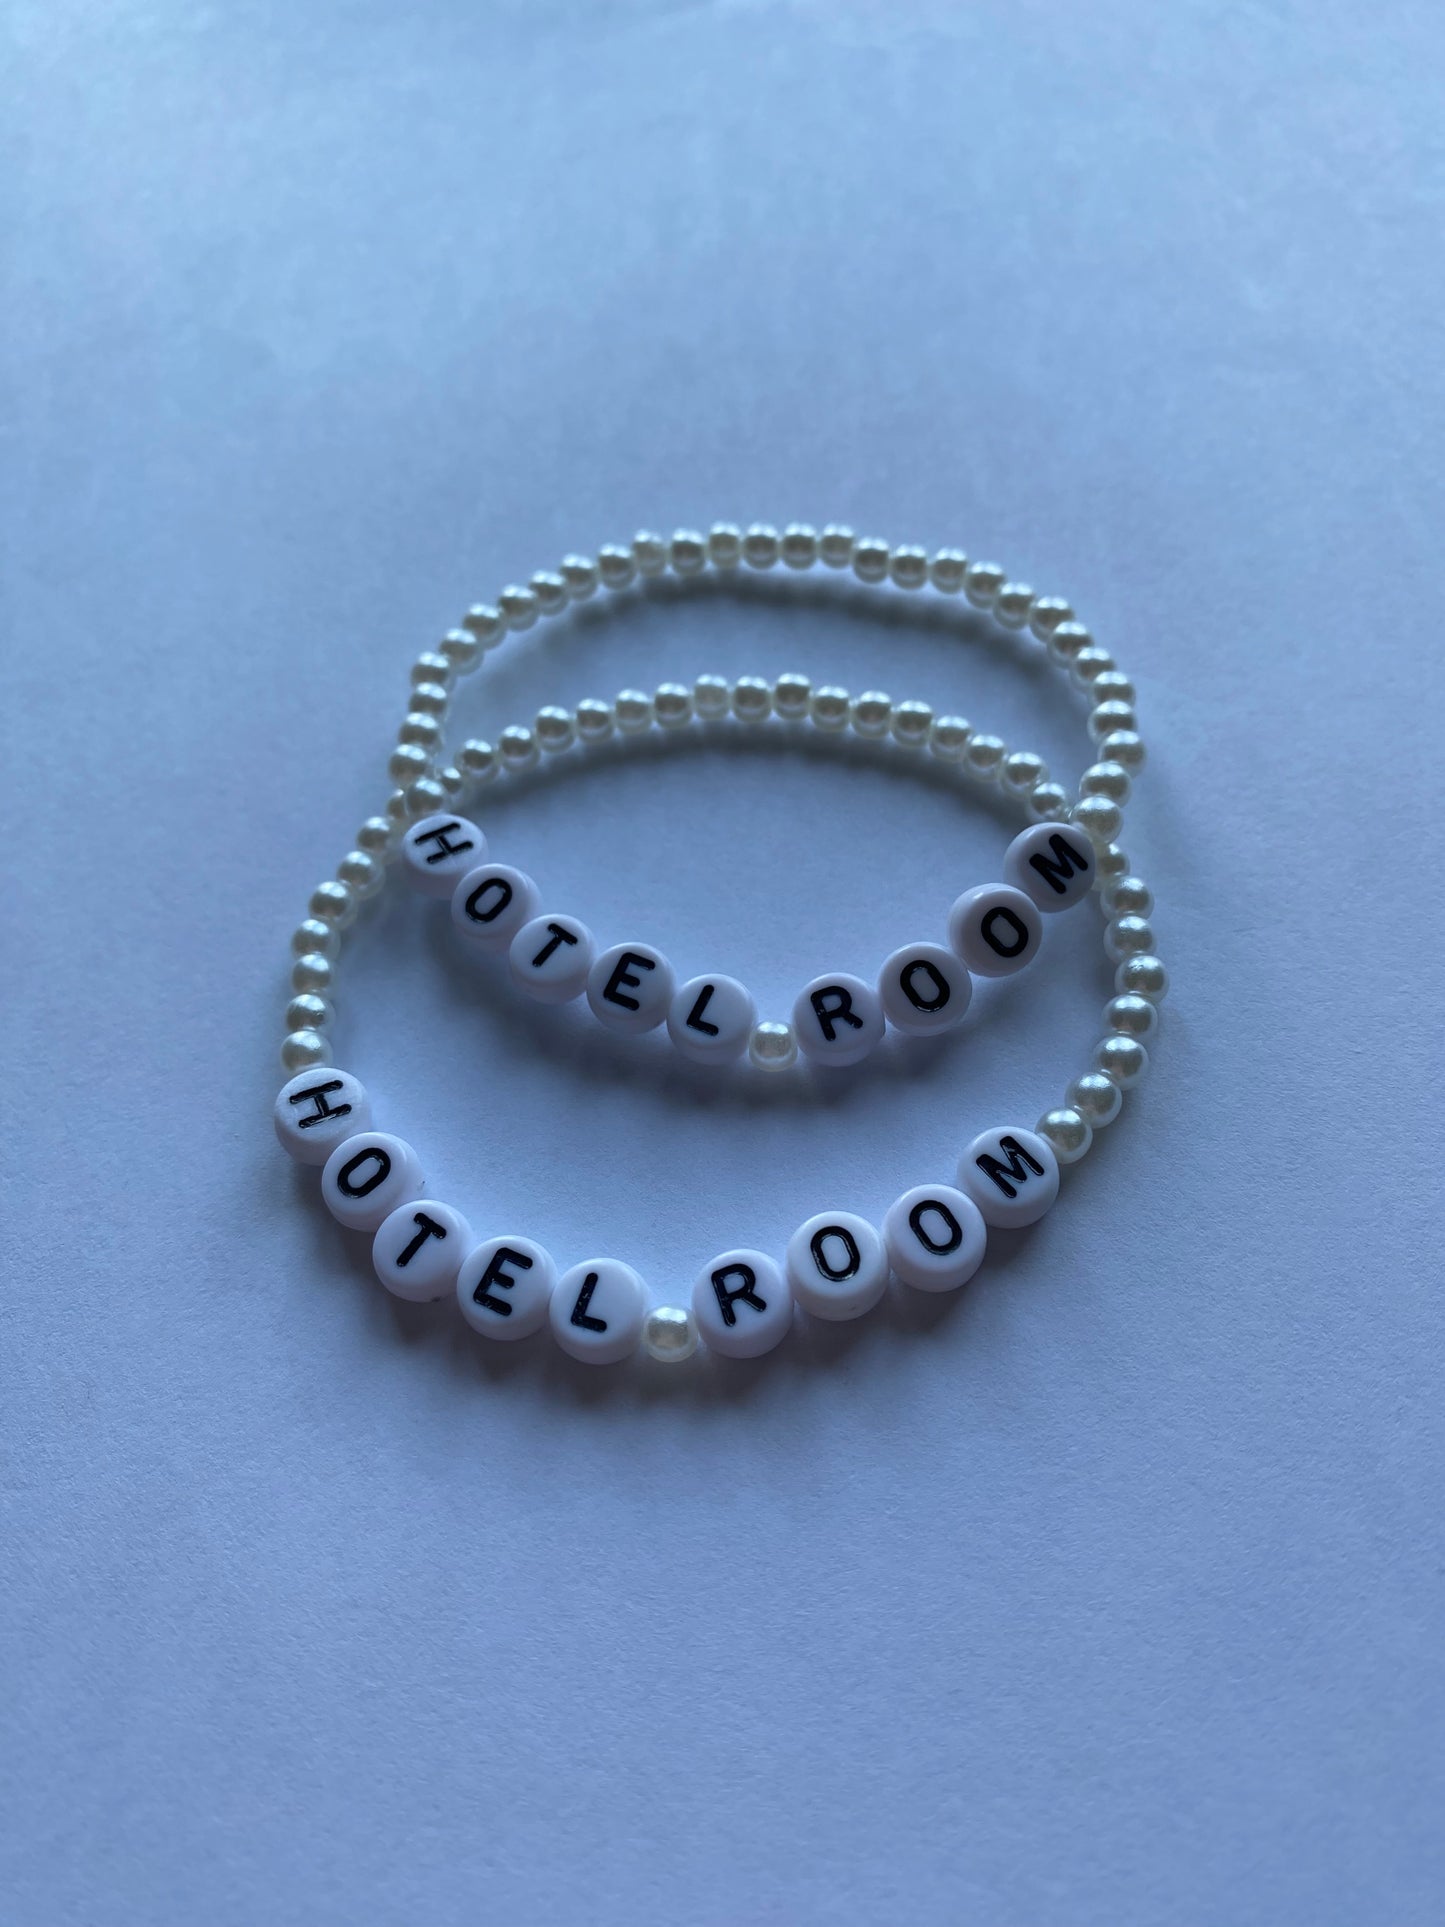 Hotel Room matching bracelets